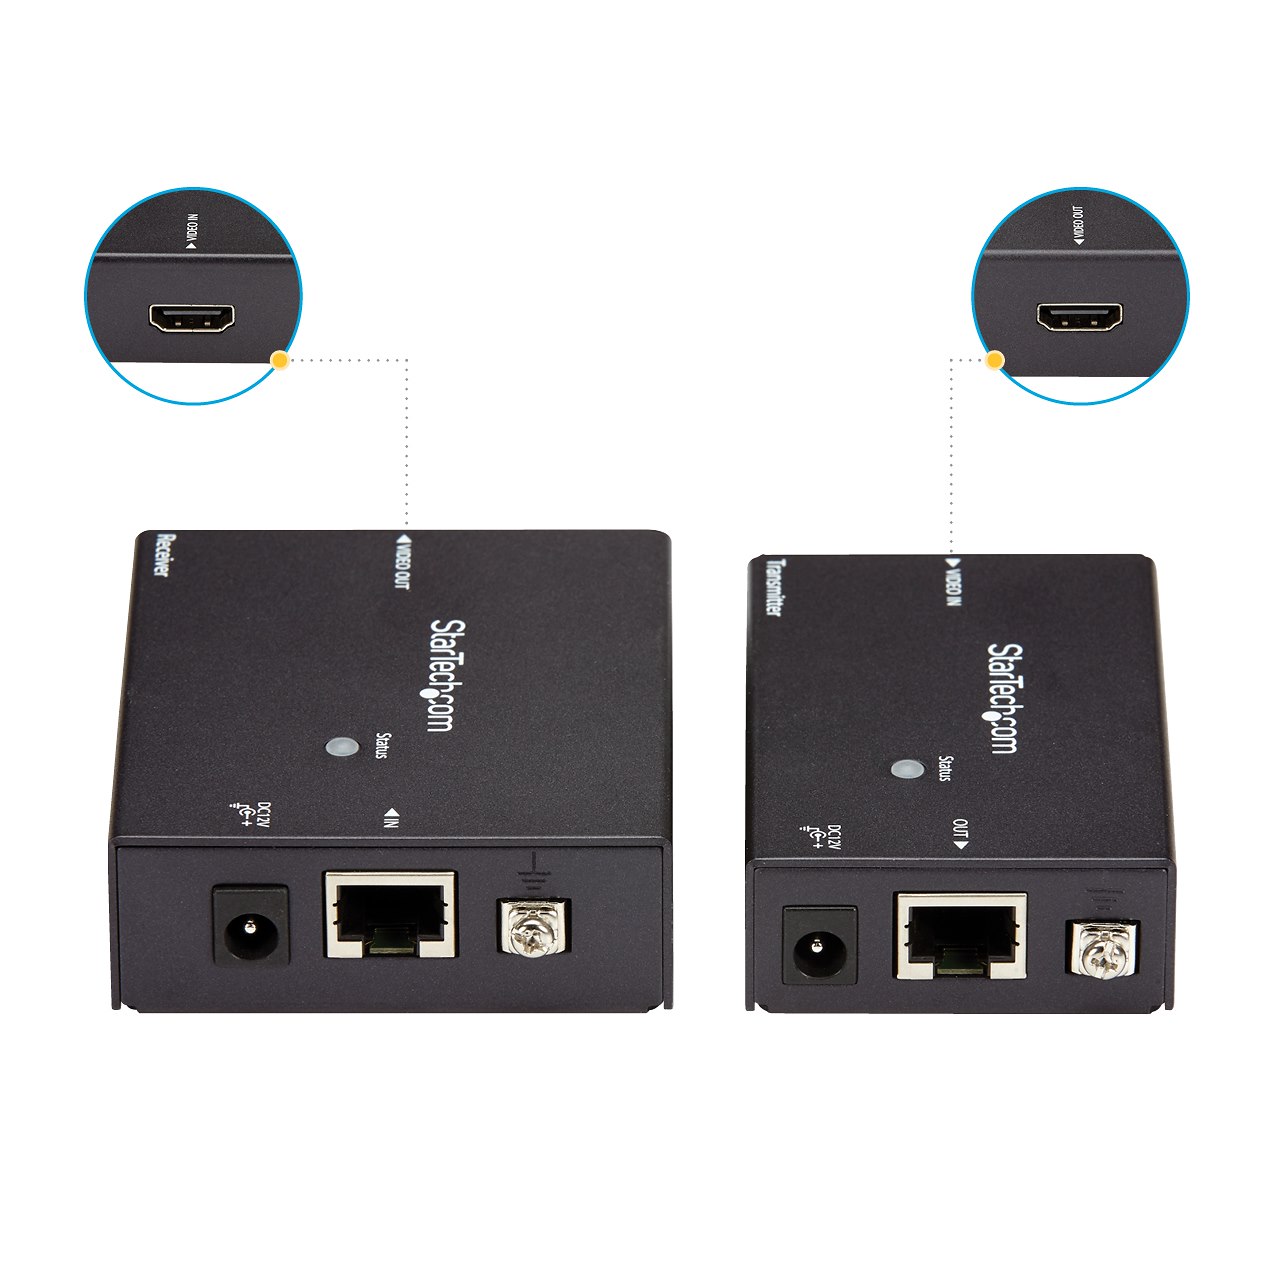 StarTech.com HDMIエクステンダー延長器 コンパクト送信機 HDBaseT規格